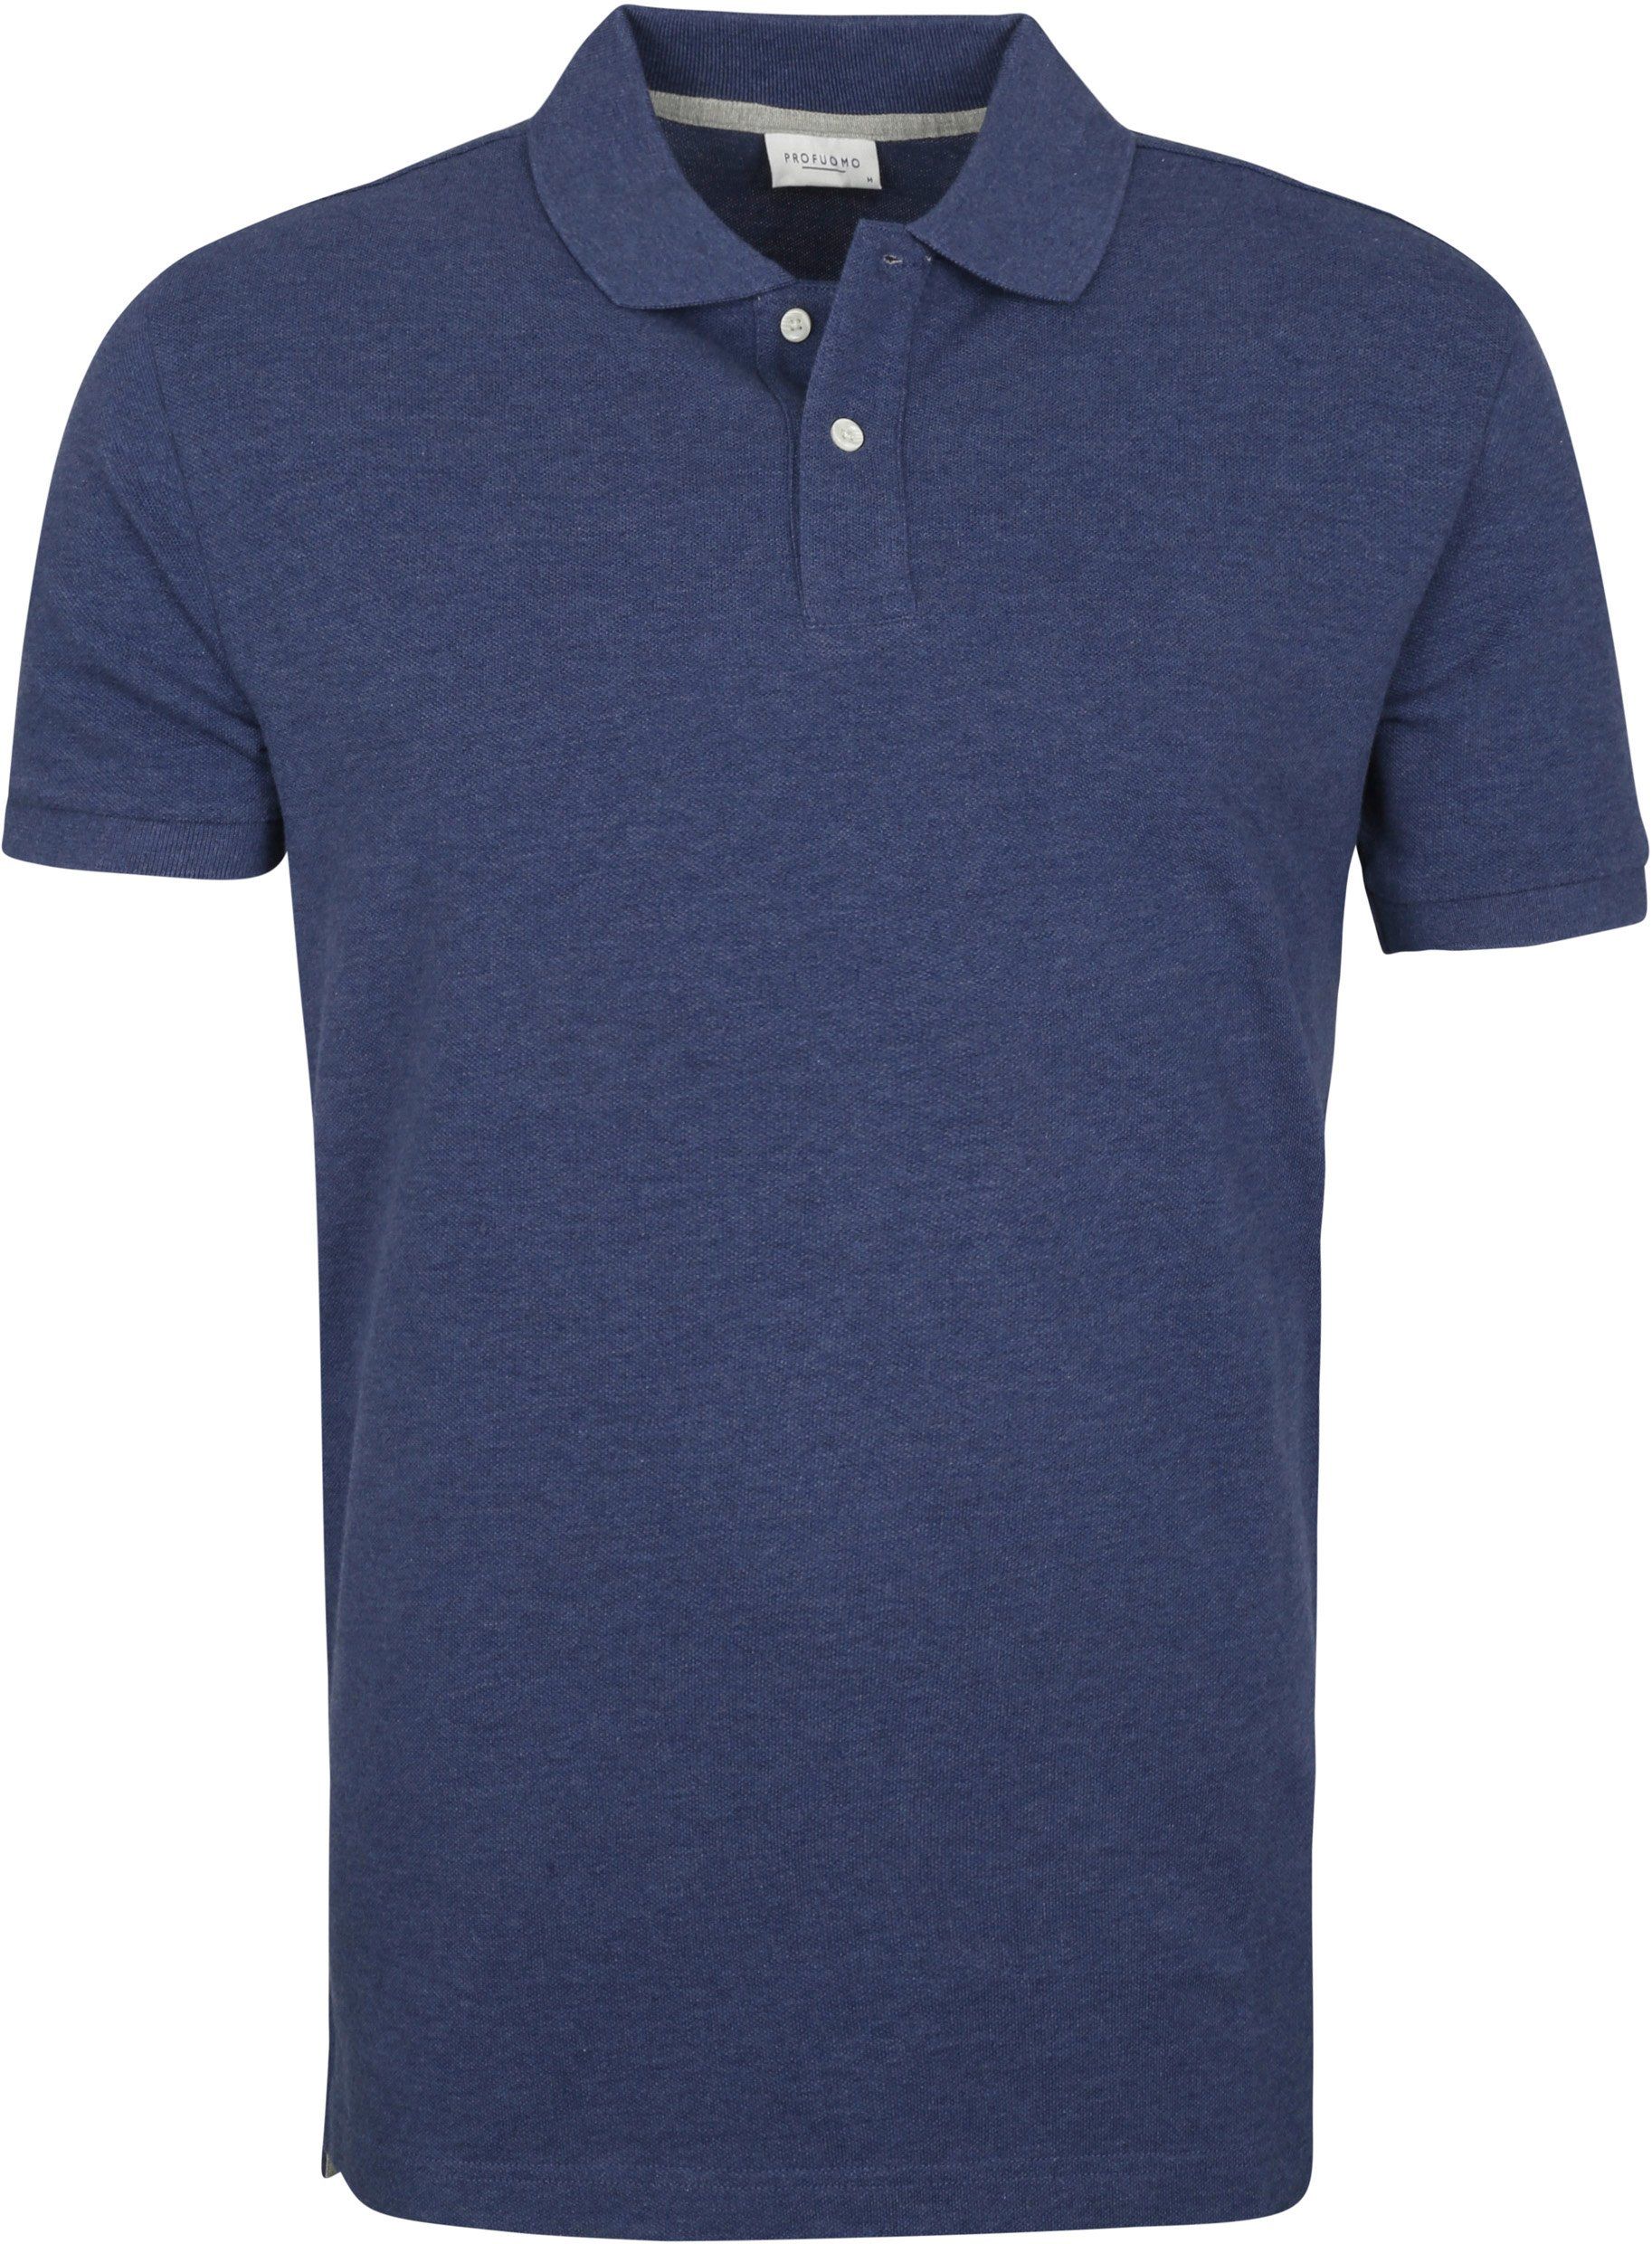 Profuomo Pique Polo Shirt Indigo Blue Dark Blue size L